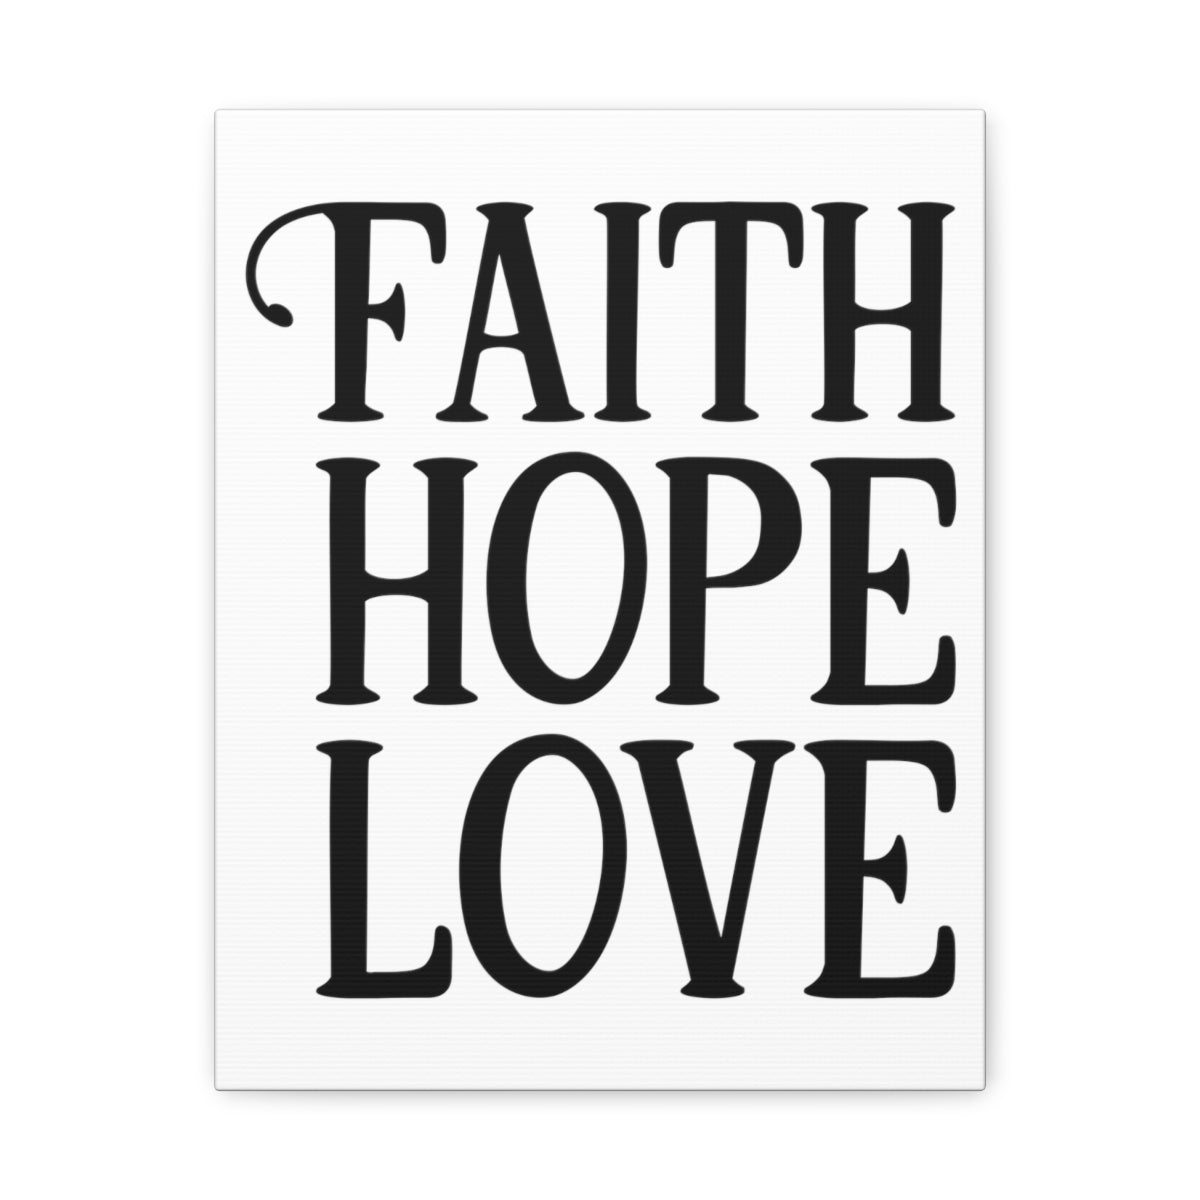 Scripture Walls Faith Hope Love 1 Corinthians 13:13 Christian Wall Art Print Ready to Hang Unframed-Express Your Love Gifts